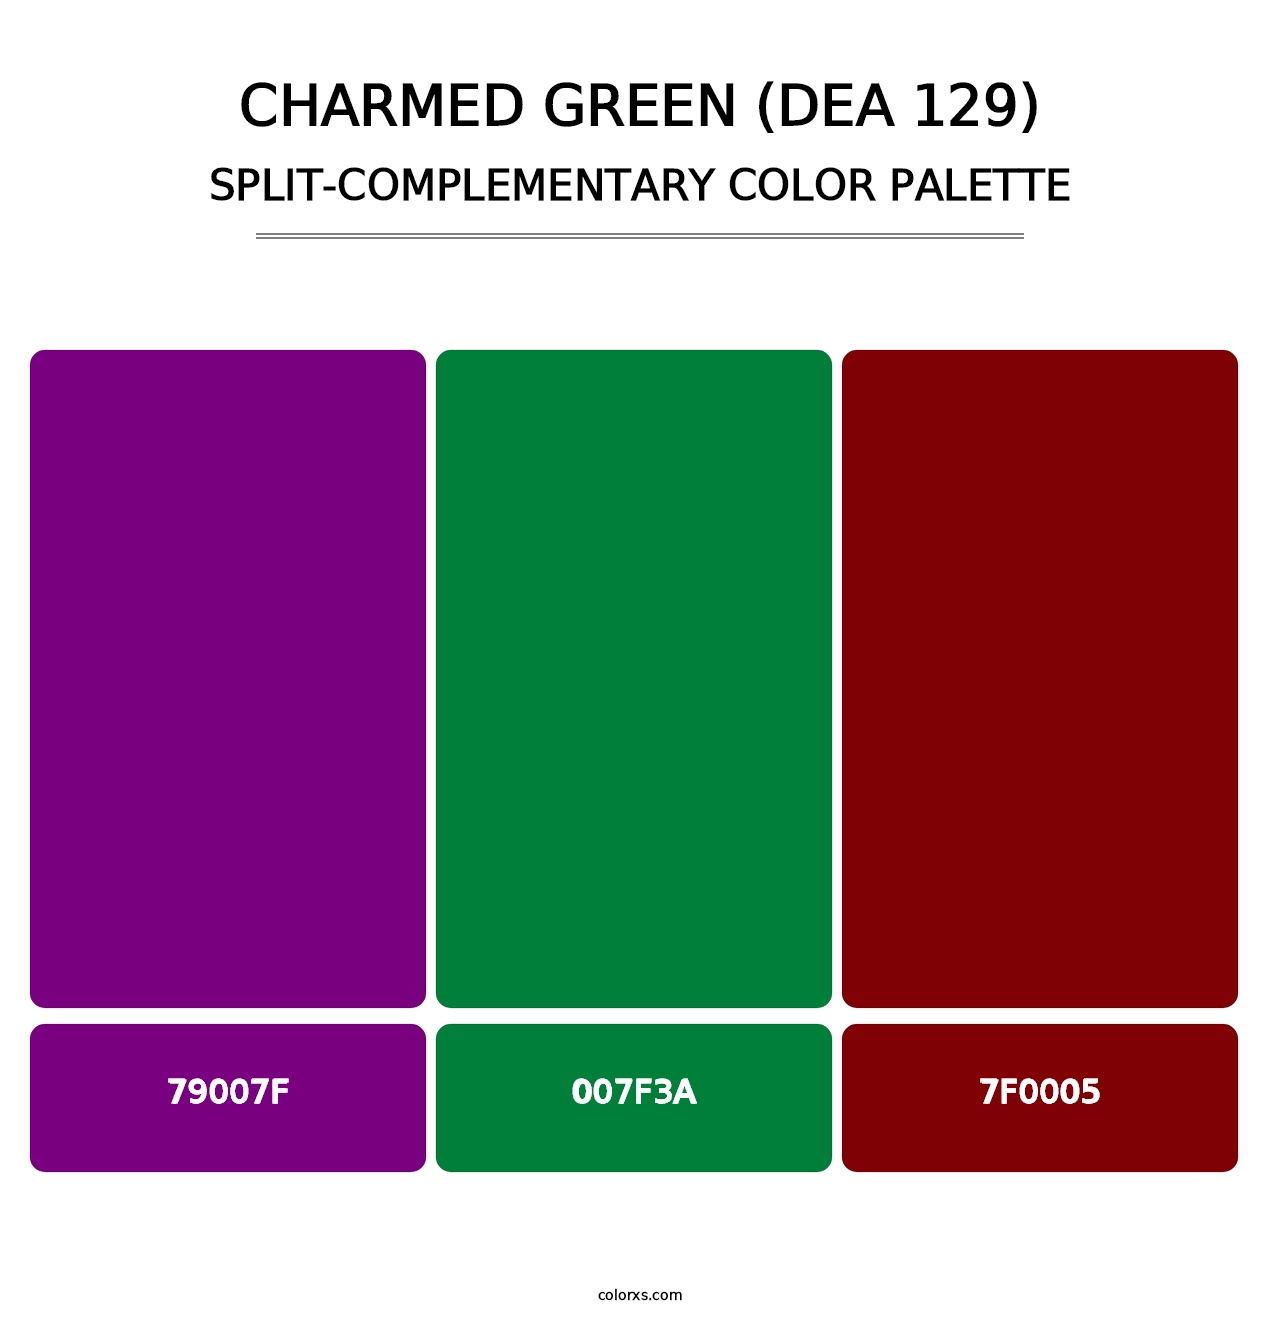 Charmed Green (DEA 129) - Split-Complementary Color Palette